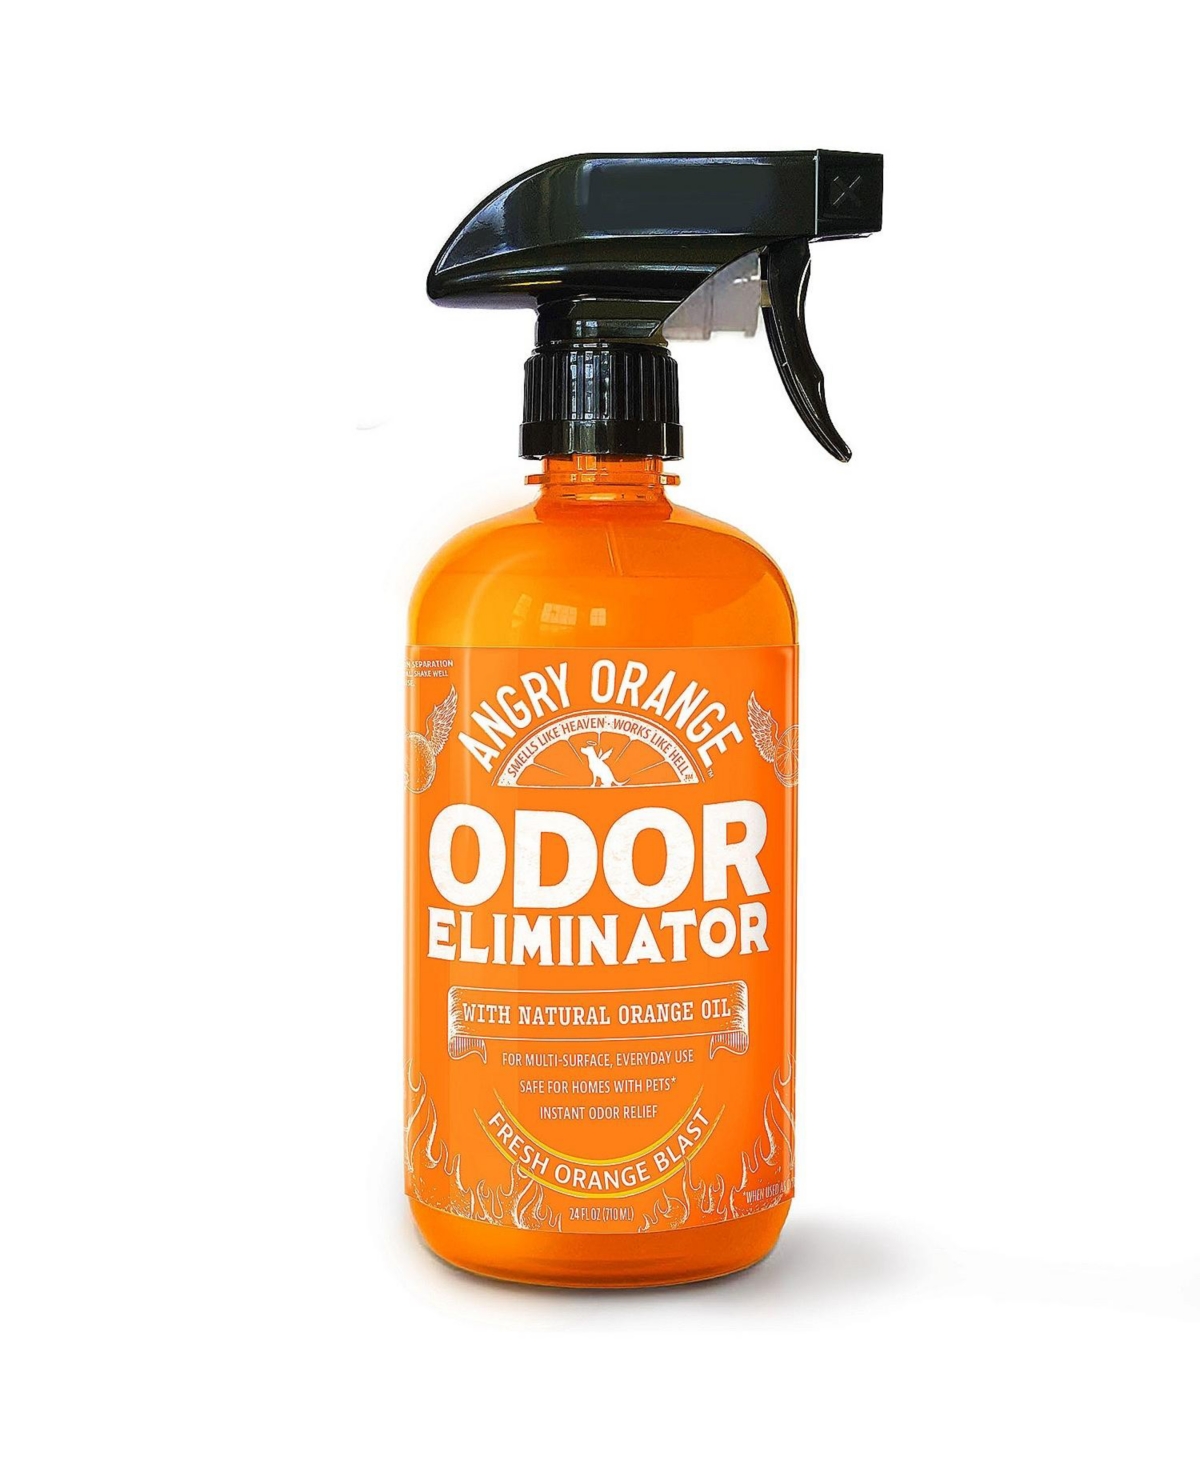 24 oz Ready-to-Use Citrus Pet Odor Eliminator Pet Spray - Urine Remover and Carpet Deodorizer for Dogs and Cats - Orange